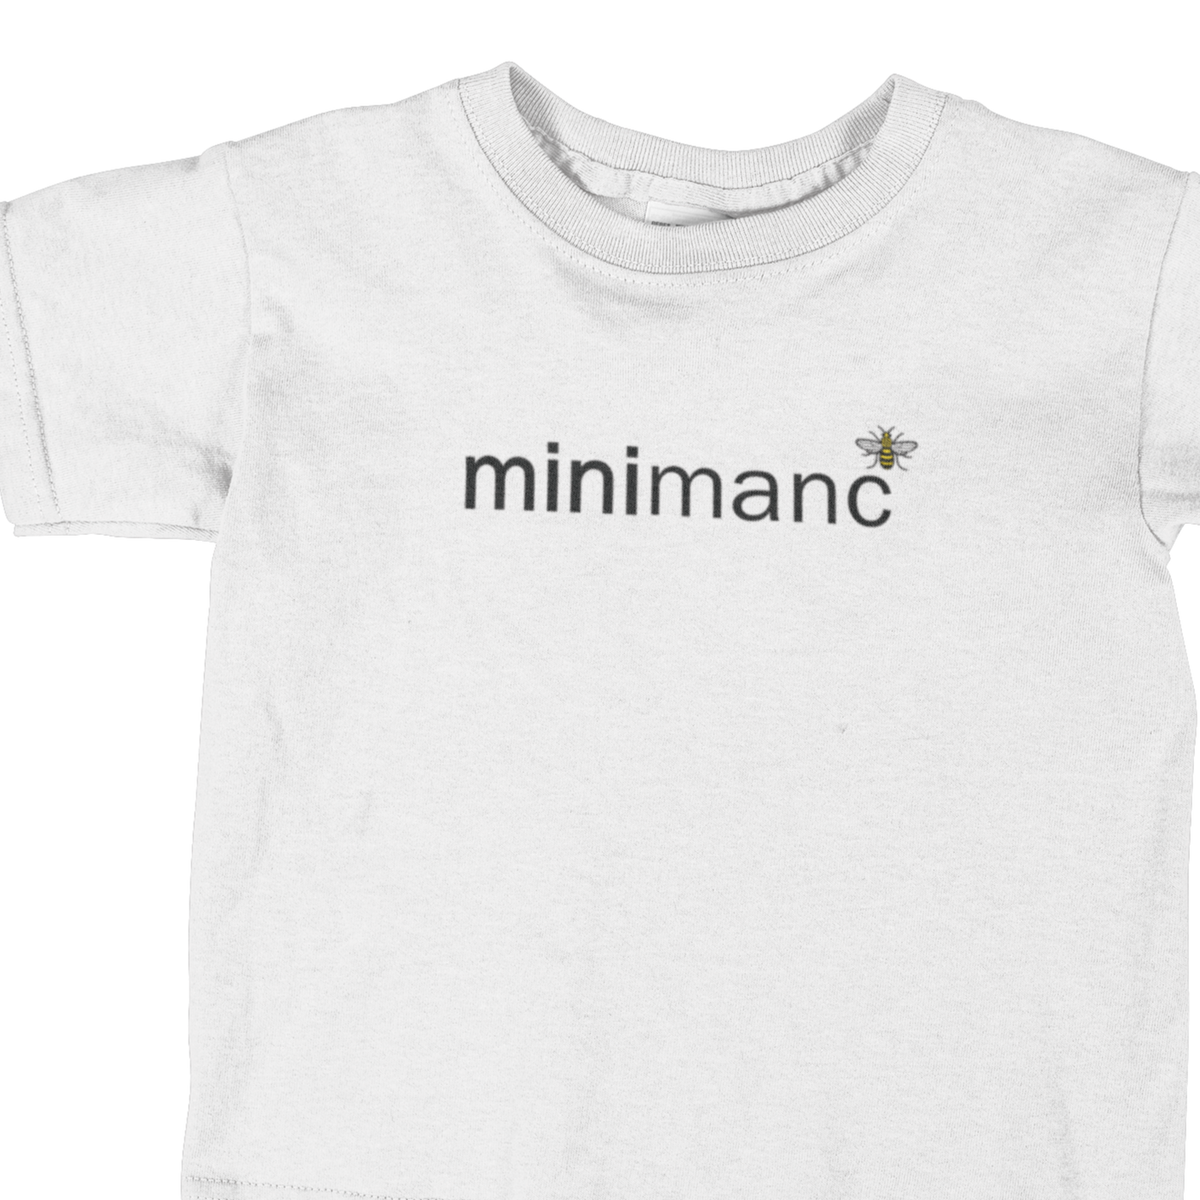 MiniManc T-Shirt - Kids - White NOW £10